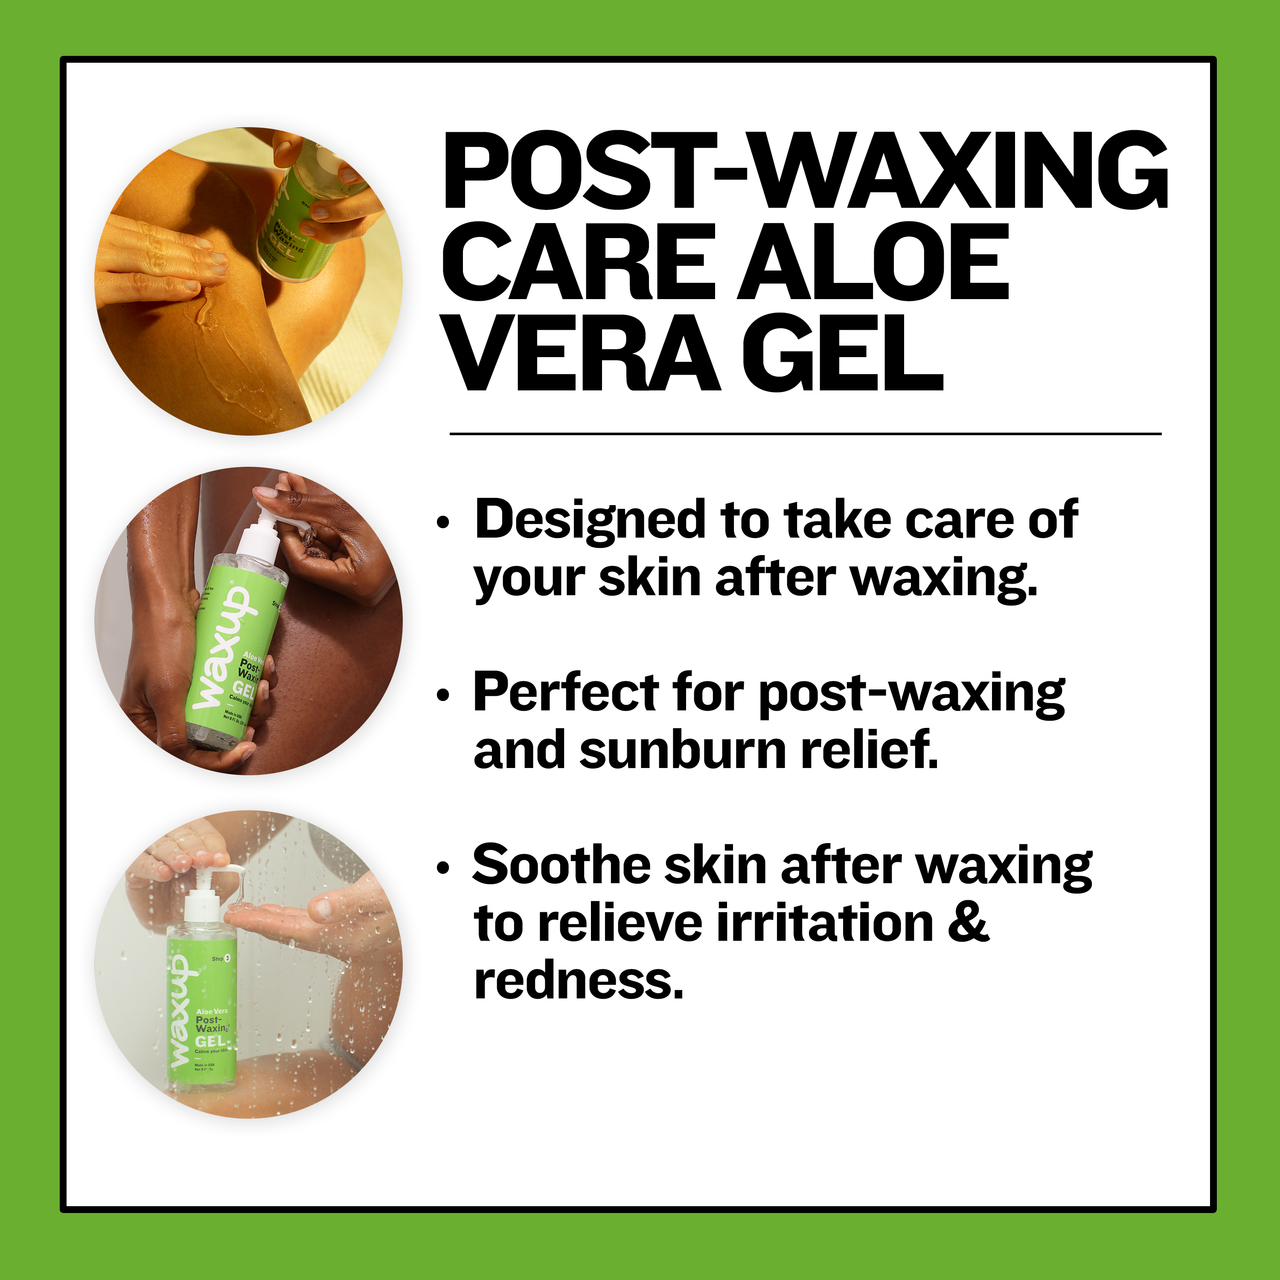 After Waxing Skin Care, Aloe Vera Gel - thatswaxup -  - Post Waxing Skin Care - waxup hair removal wax body waxing kit women and men professional waxing supplies